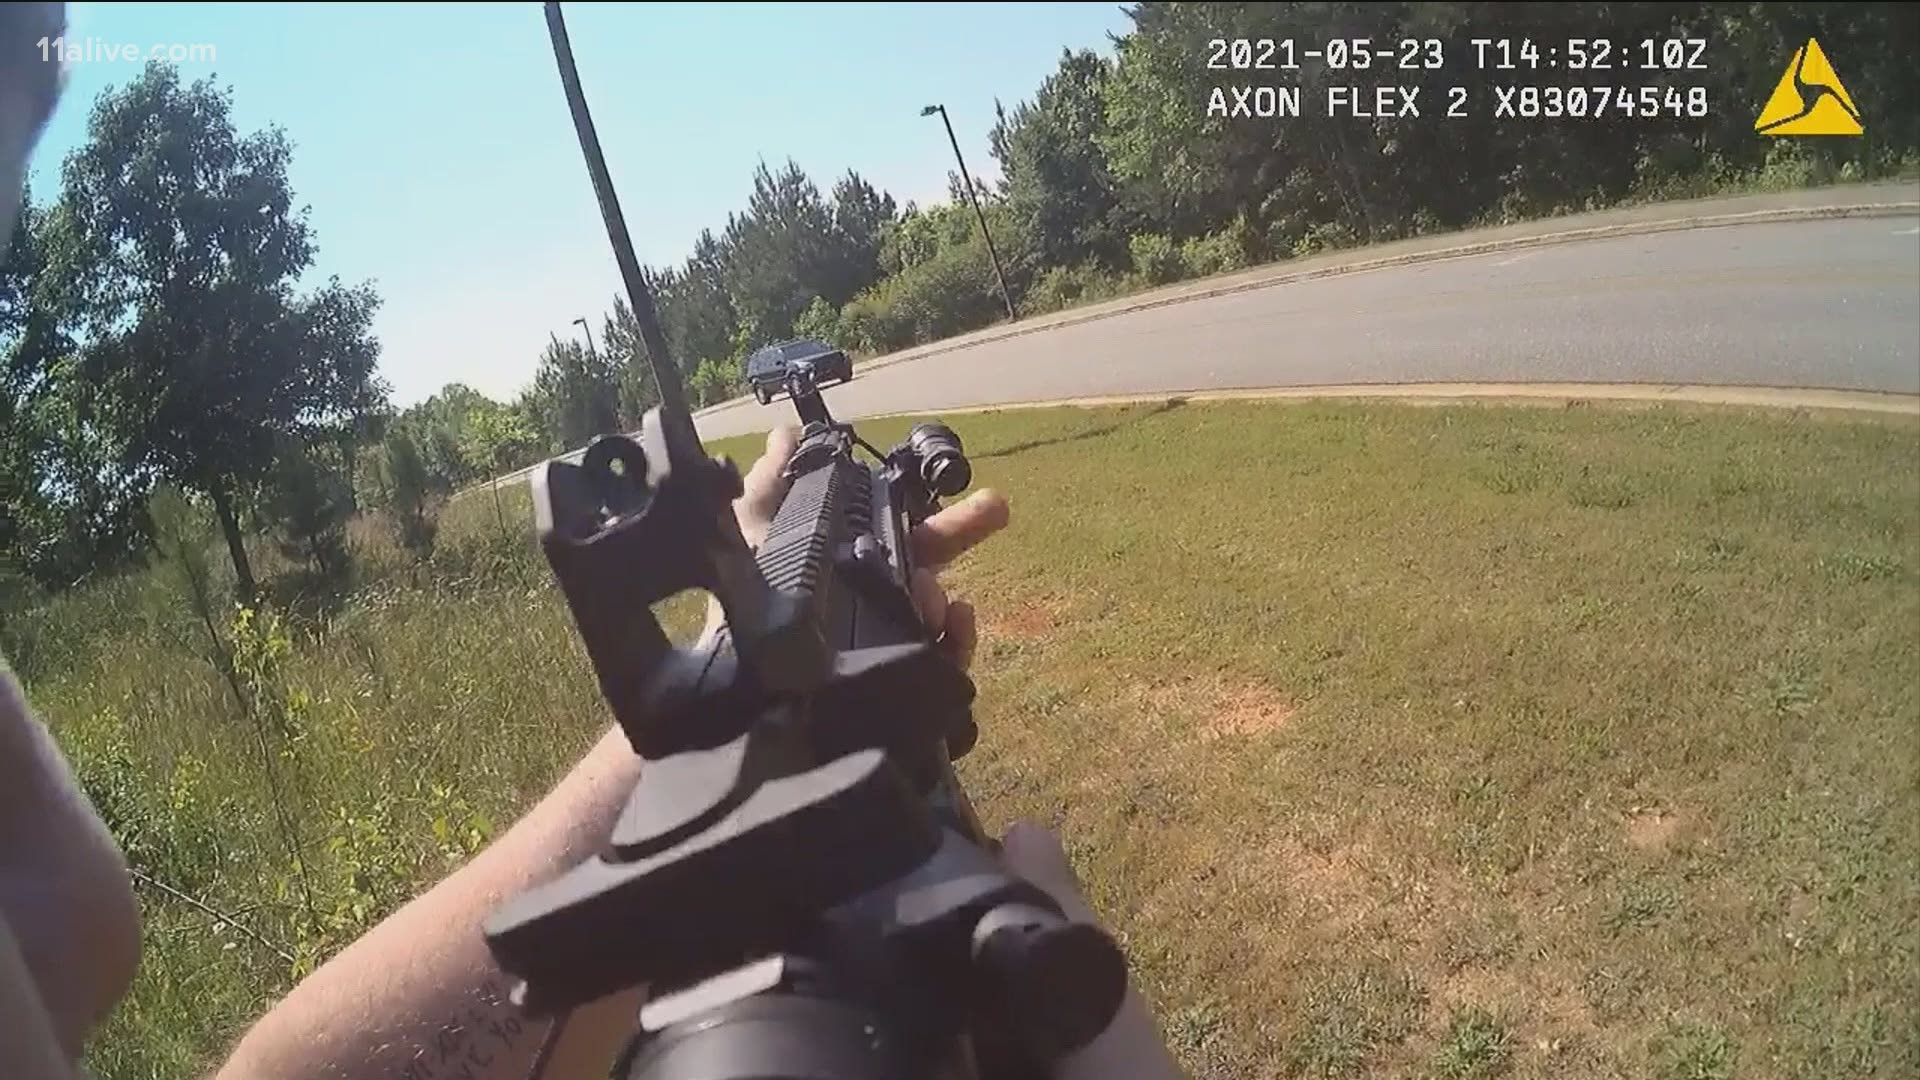 Athens park shooting bodycam, 911 audio, surveillance released 11alive